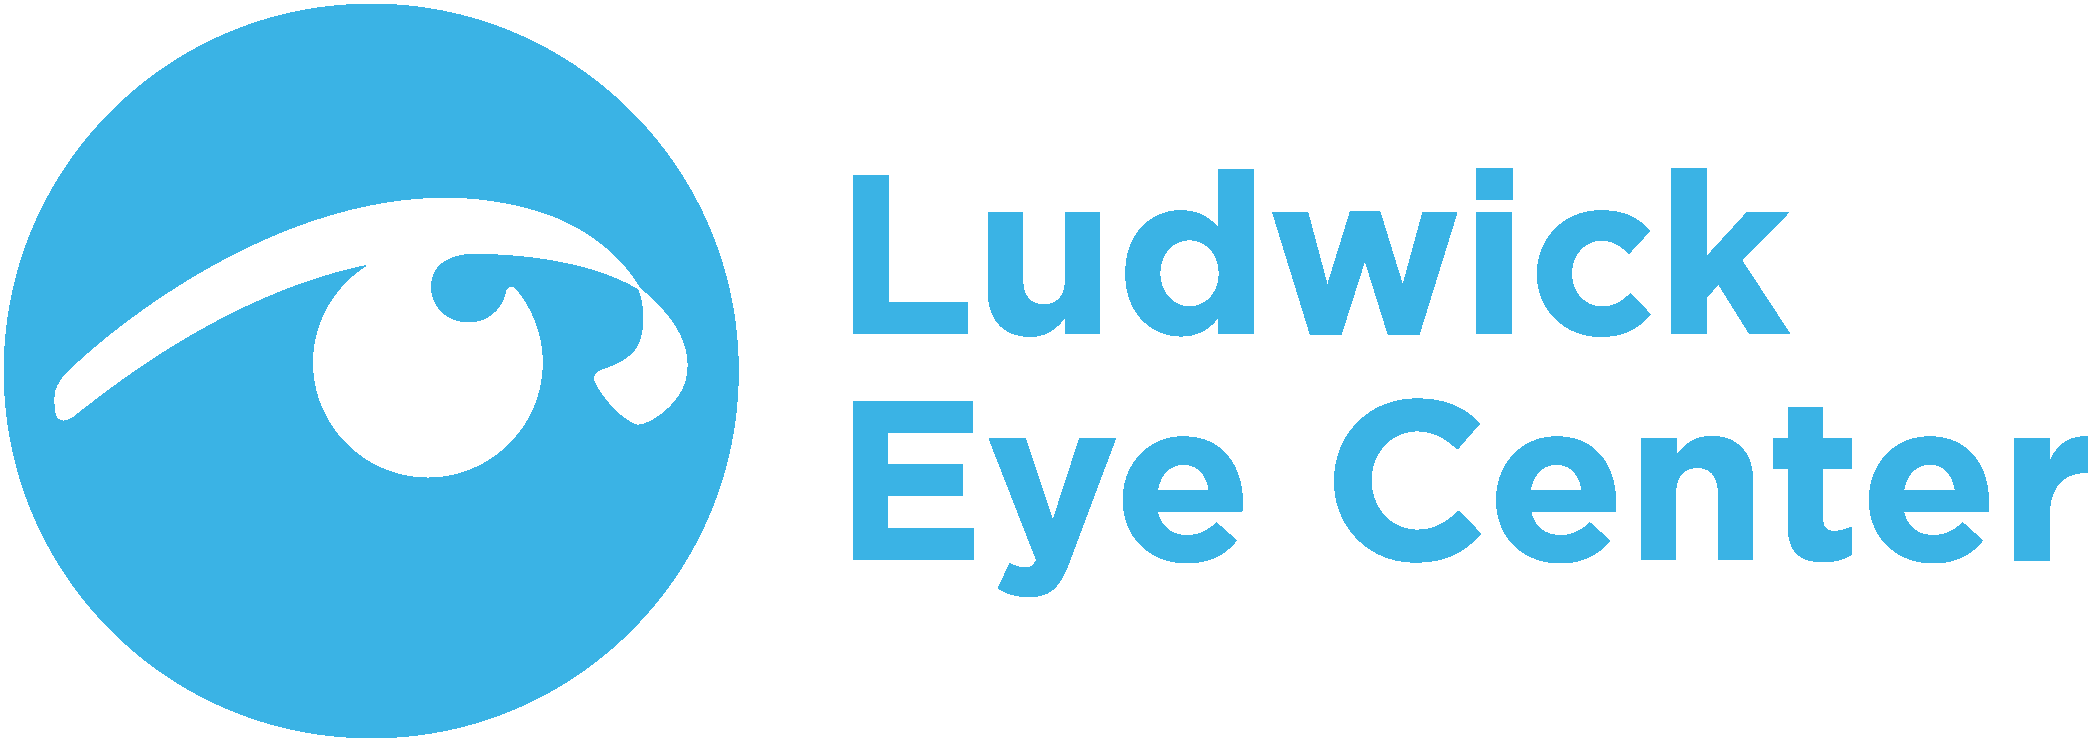 Ludwick Eye Center